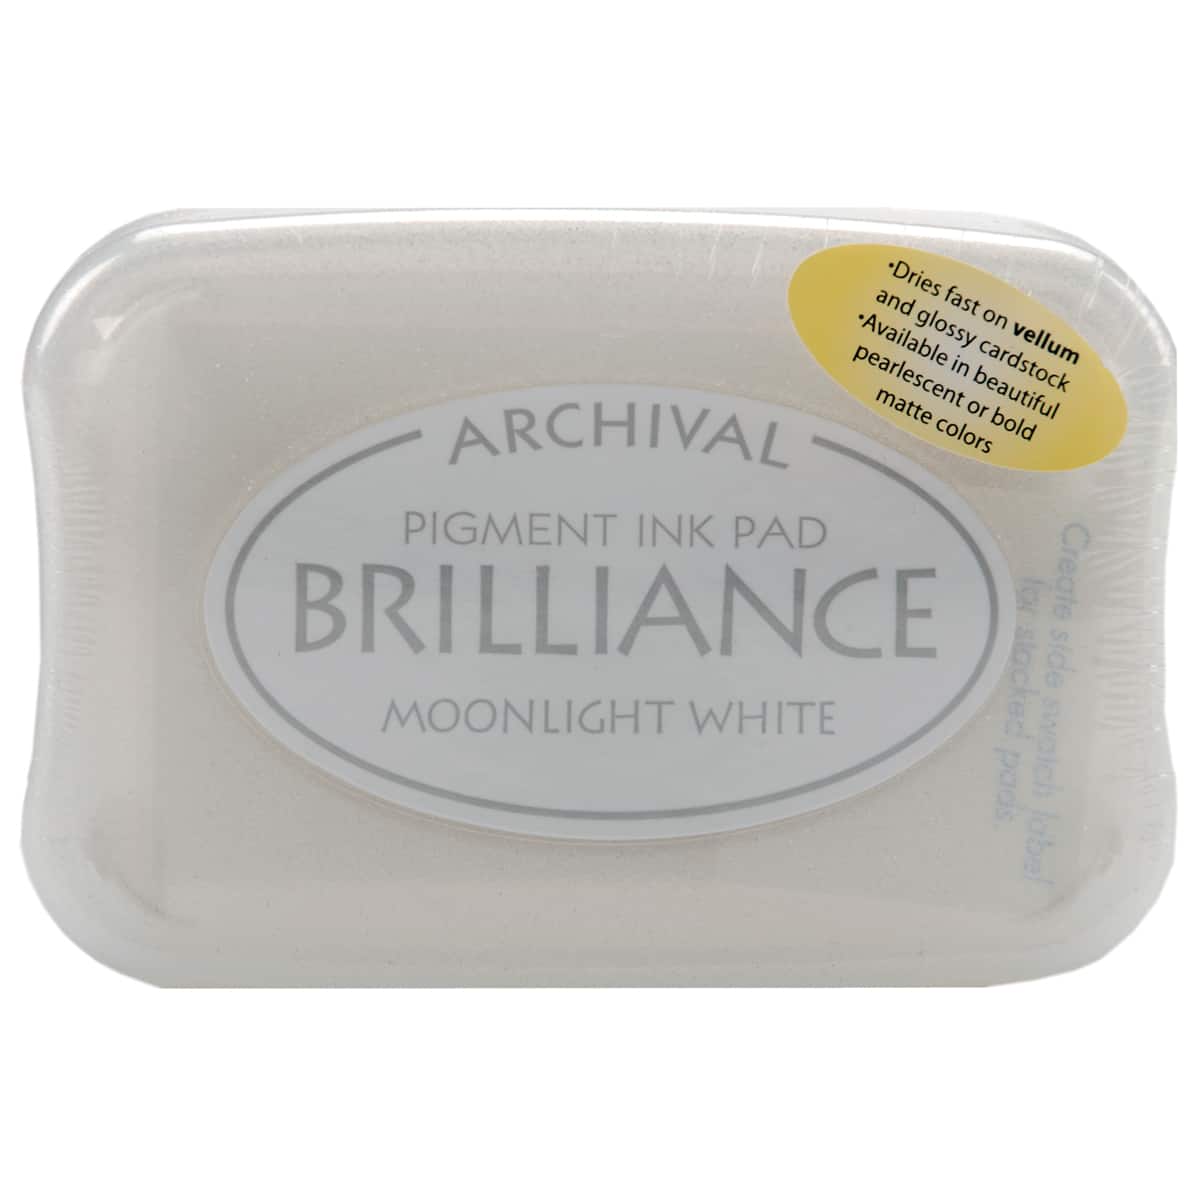 Brilliance Pigment Ink Pad Moonlight White